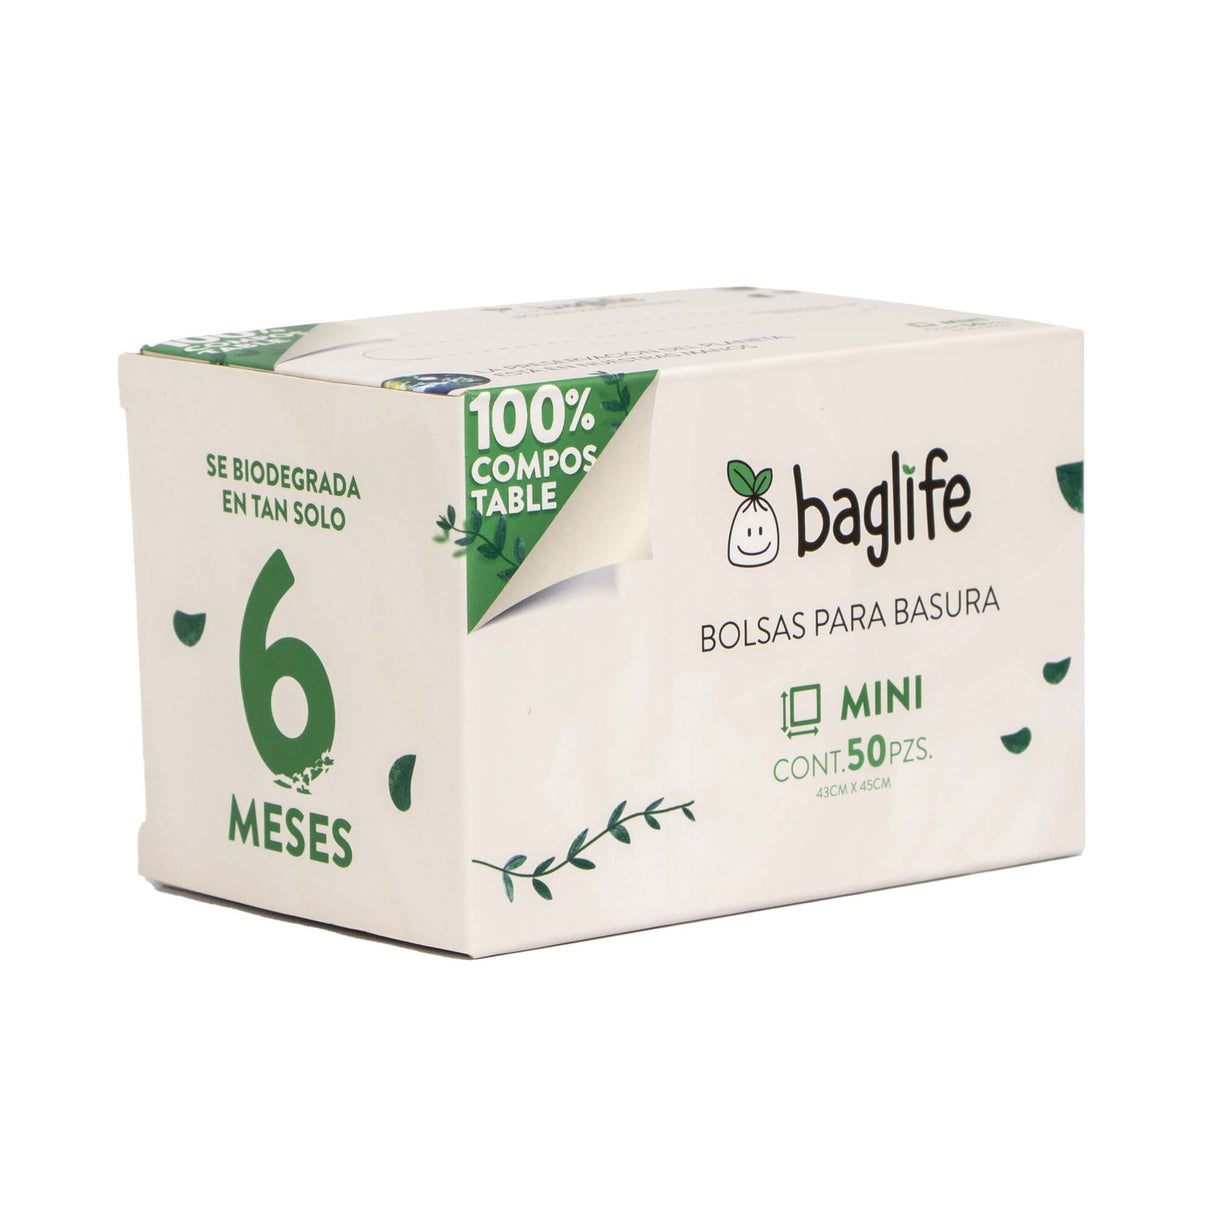 COMPOSTABLE BAGLIFE MINI 17X18 BOX WITH 50 PCS